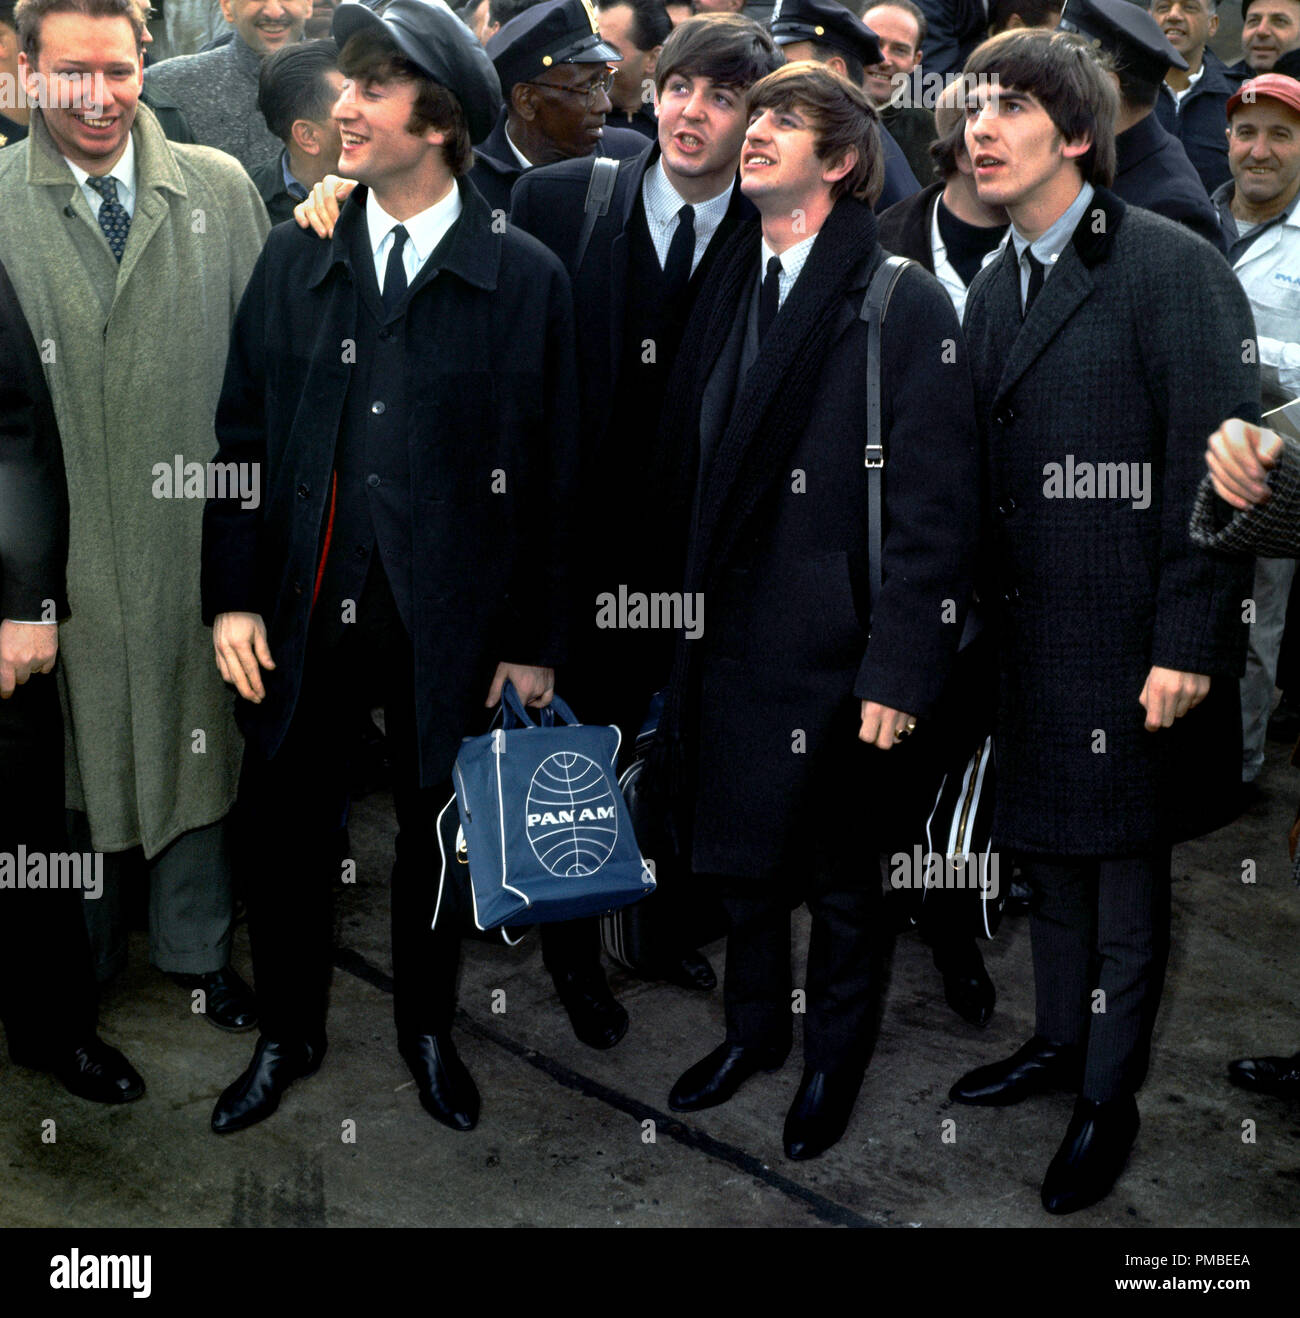 John Lennon e Paul McCartney, Ringo Starr e George Harrison (i Beatles,) a Kennedy, 1964 Riferimento File # 33371 669THA Foto Stock